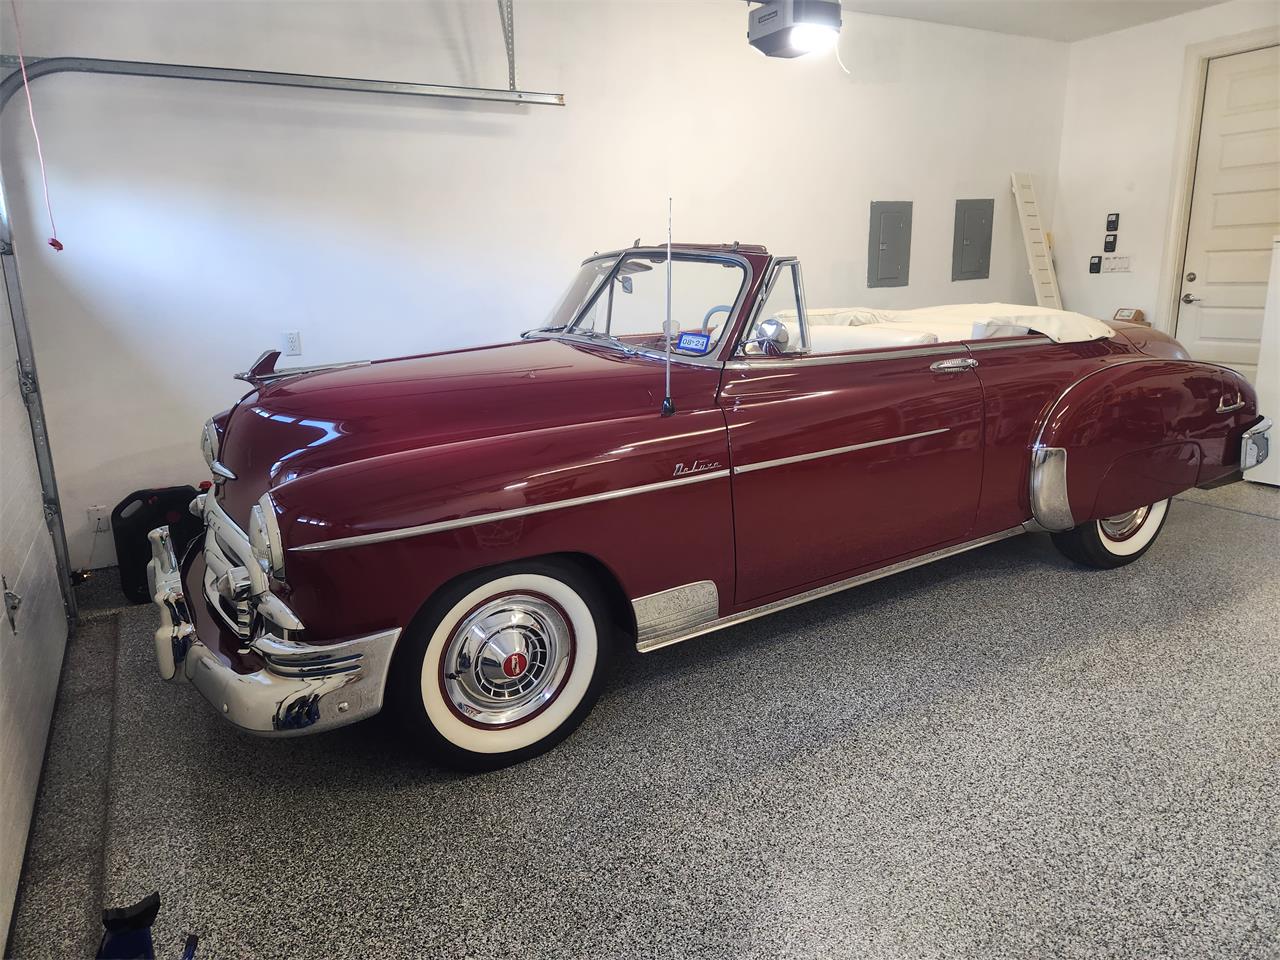 For Sale: 1950 Chevrolet Styleline Deluxe in Leander, Texas for sale in Leander, TX